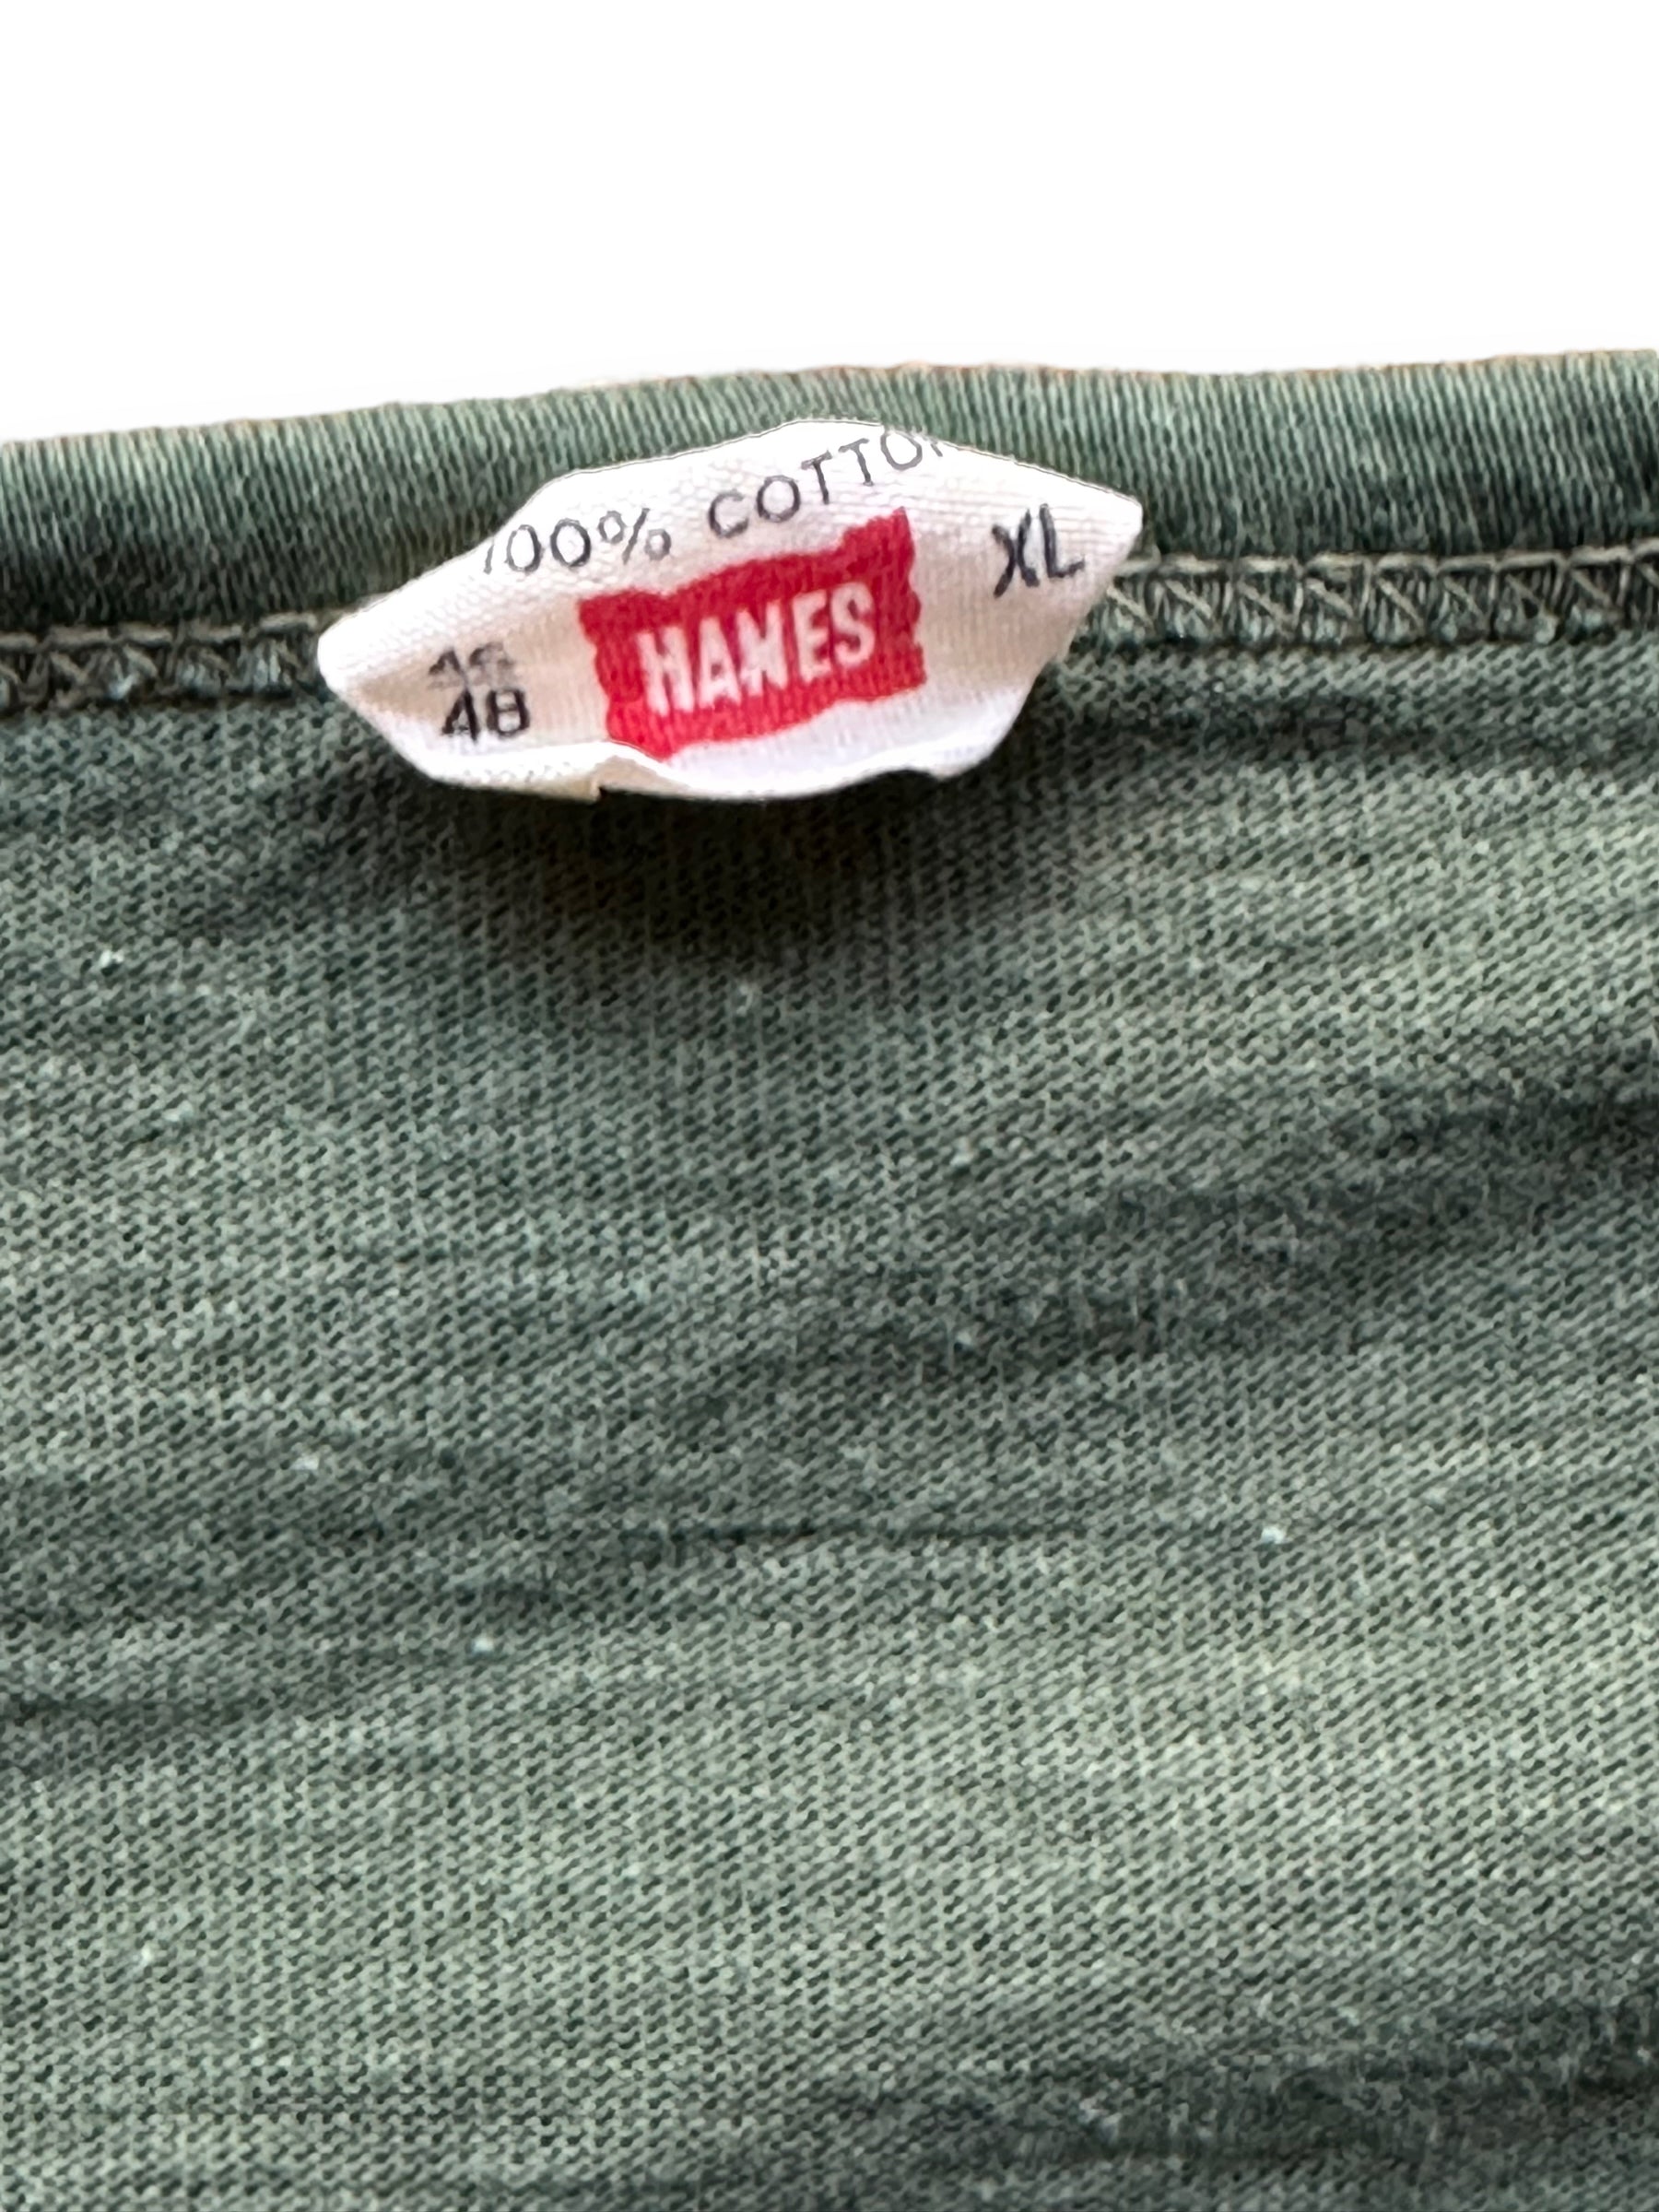 Tag View on Vintage Green Hanes Blank Tee SZ XL | Vintage Blank T-Shirts Seattle | Barn Owl Vintage Tees Seattle